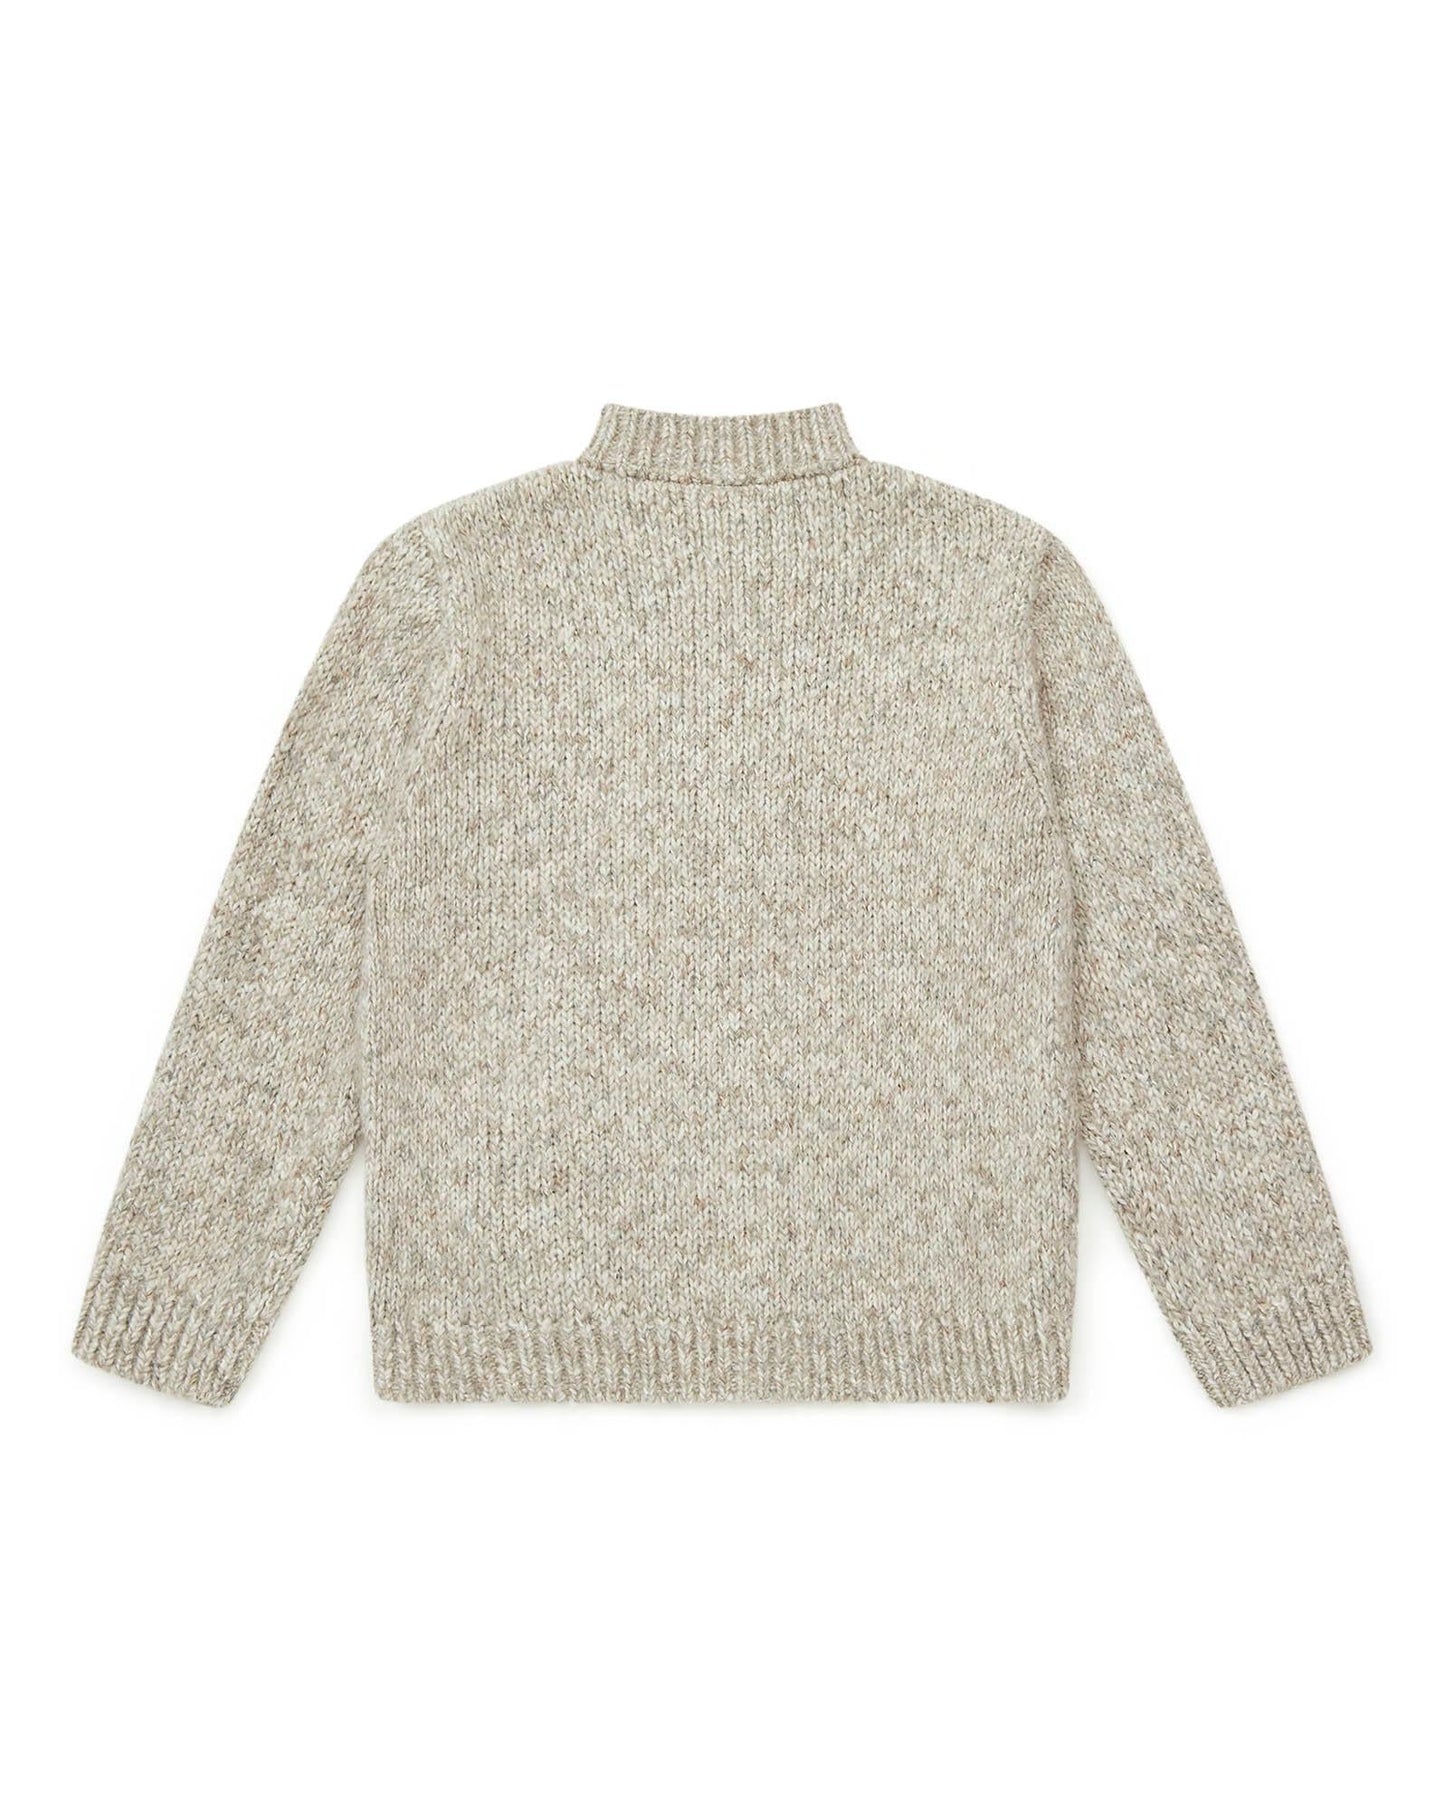 Cardigan - Collar zipped Beige in a knit